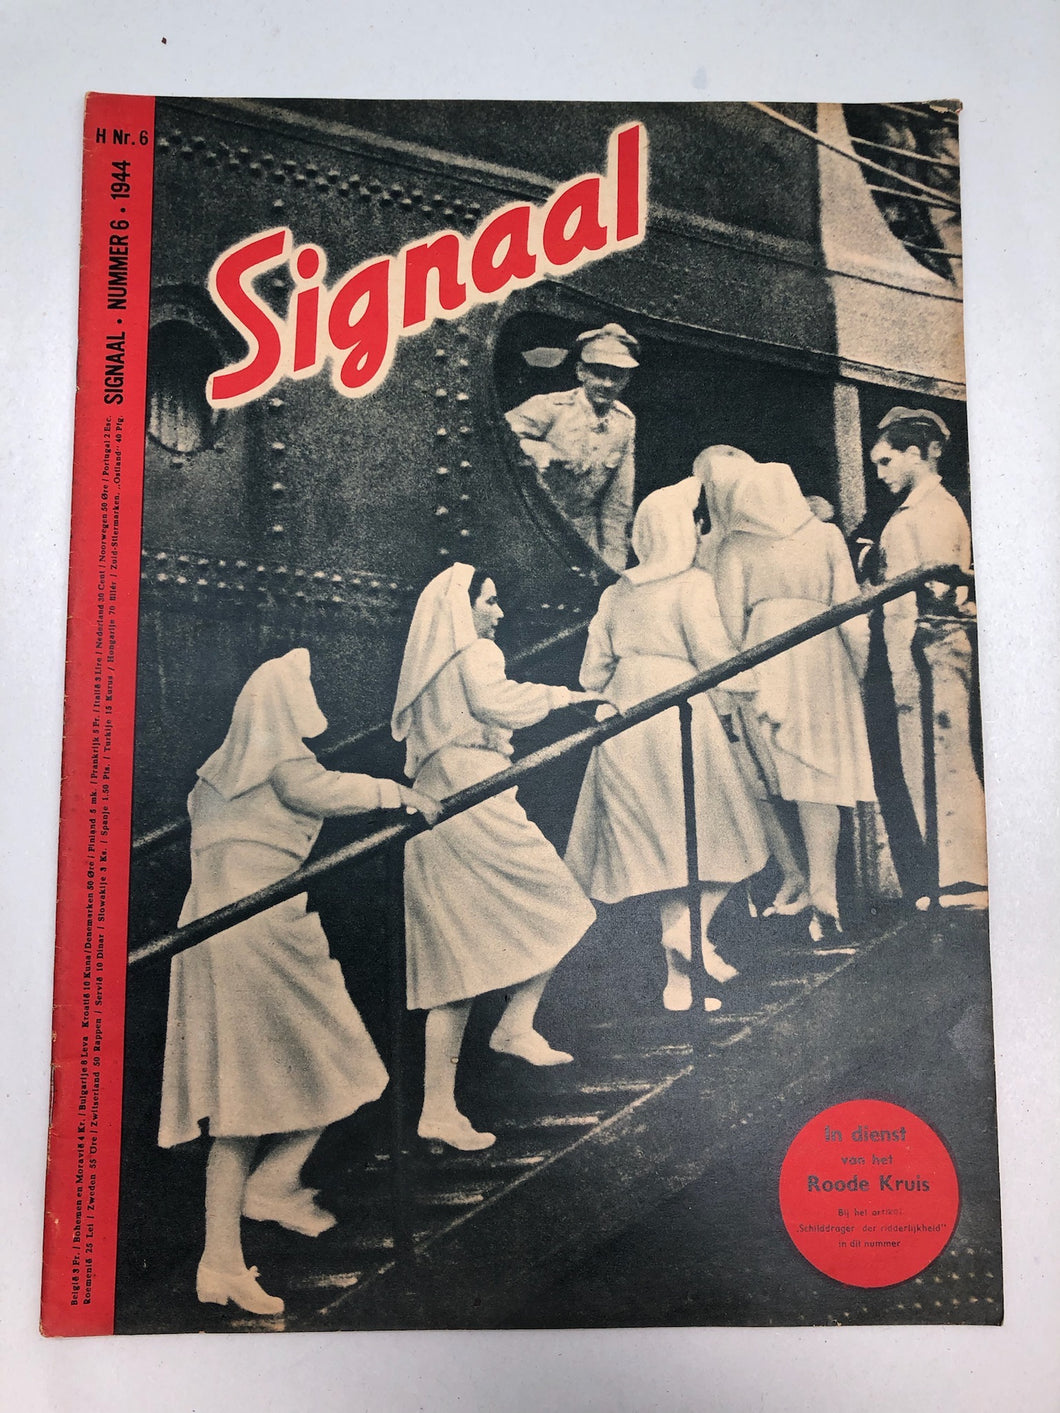 Original Dutch Language WW2 Propaganda Signaal Magazine - No.6 1944